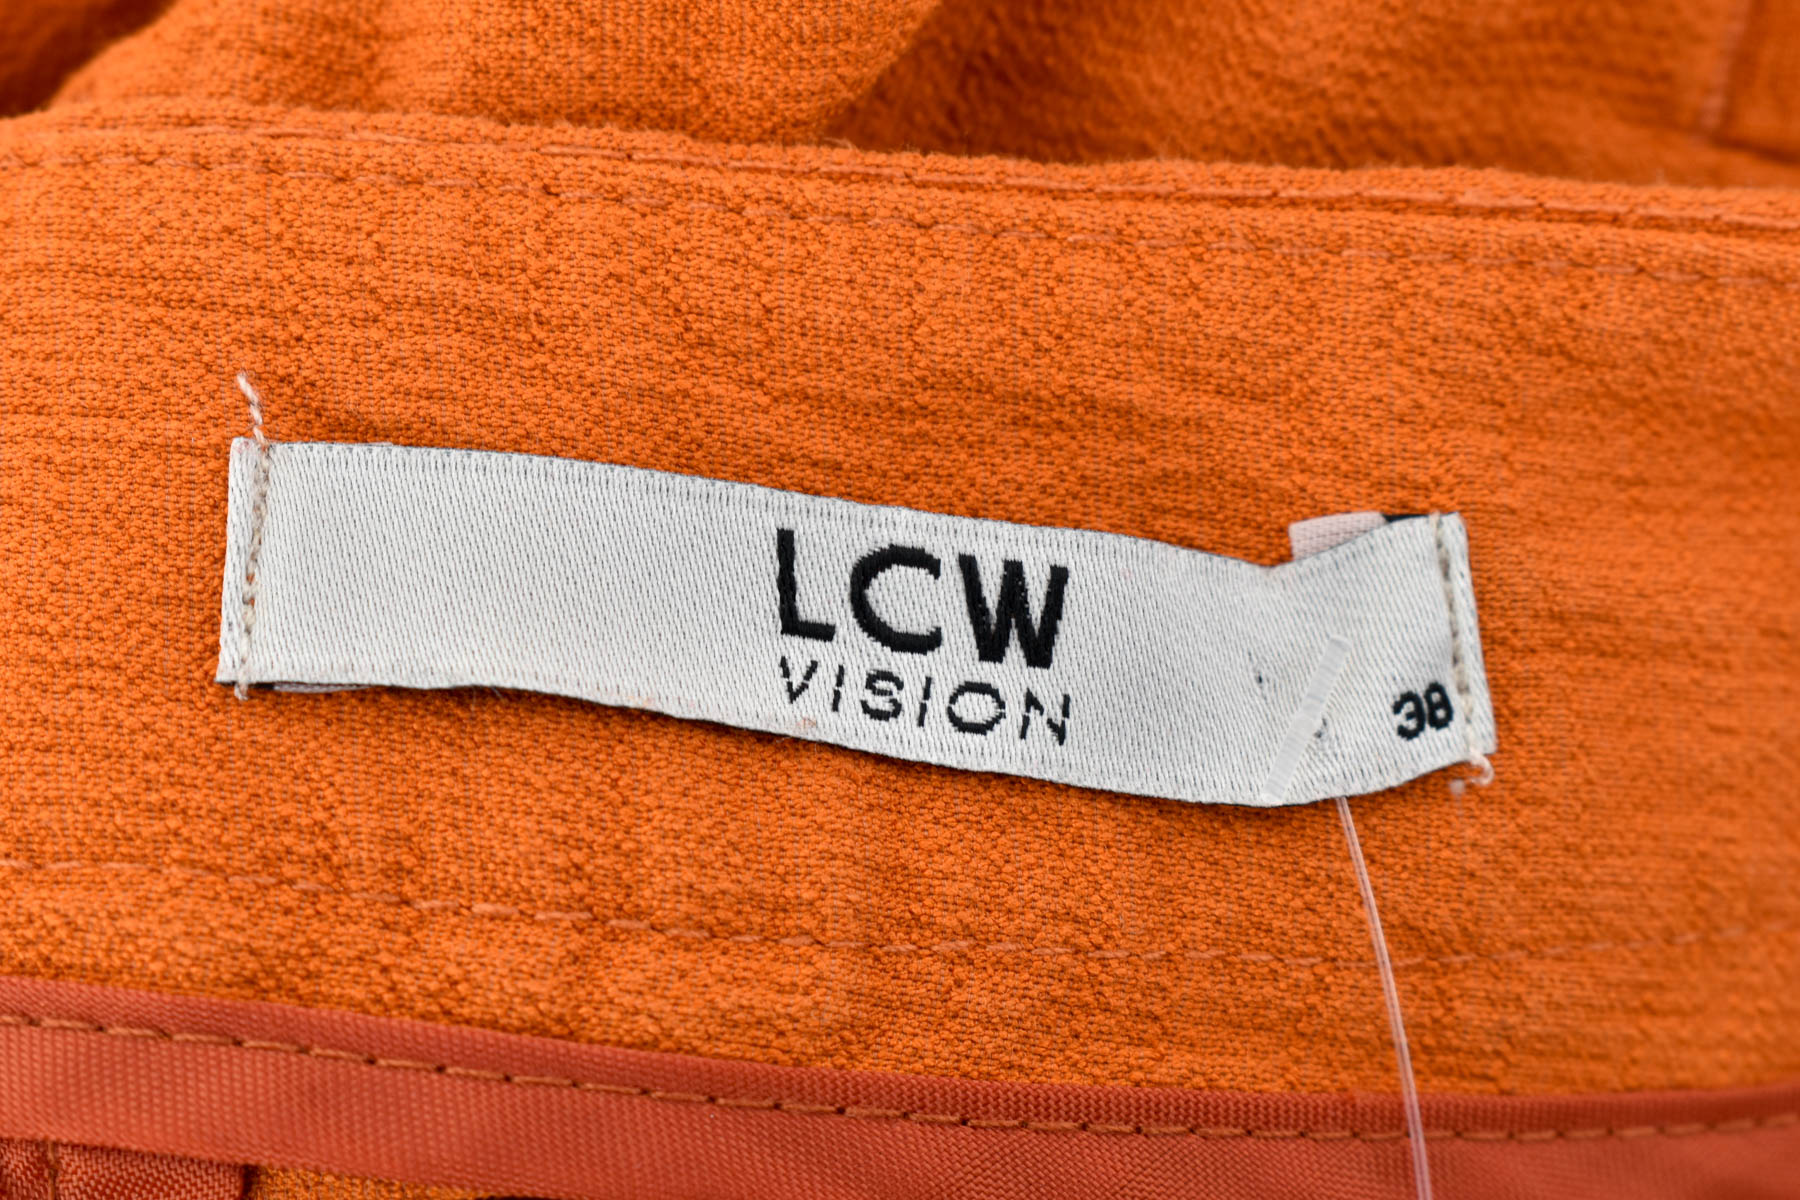 Female shorts - LCW VISION - 2